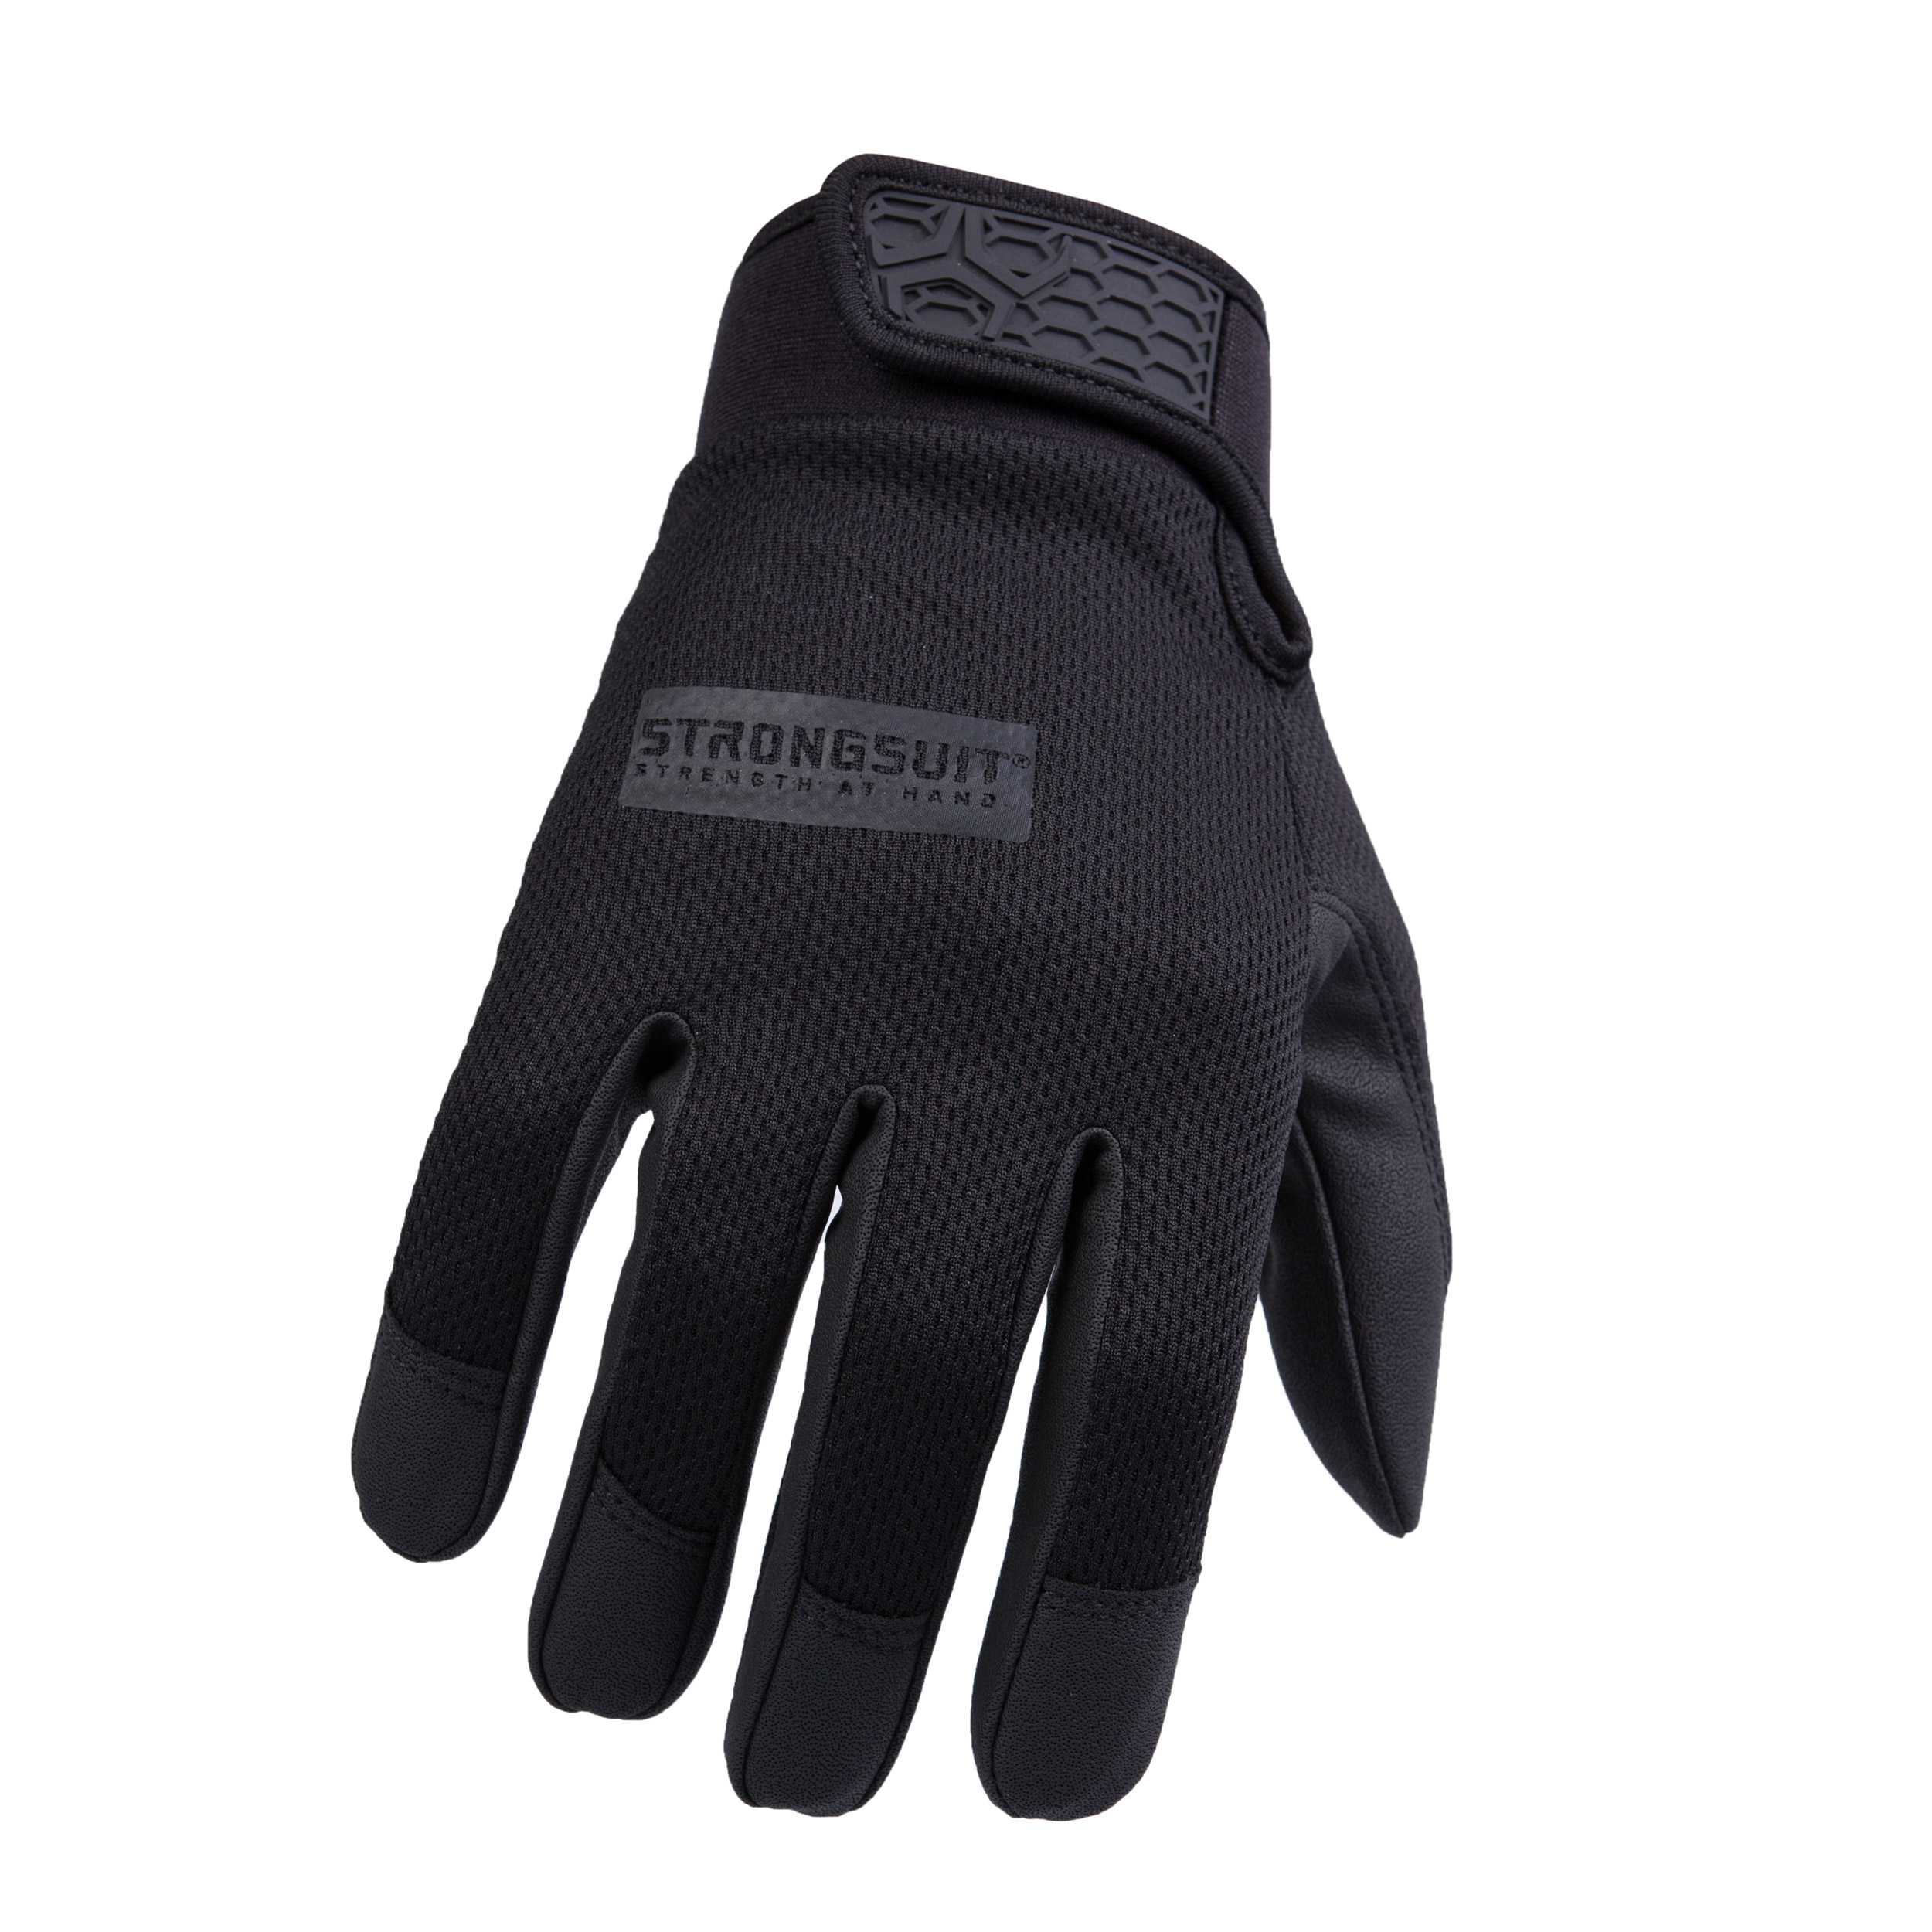 Second Skin Gloves Black Gloves Small